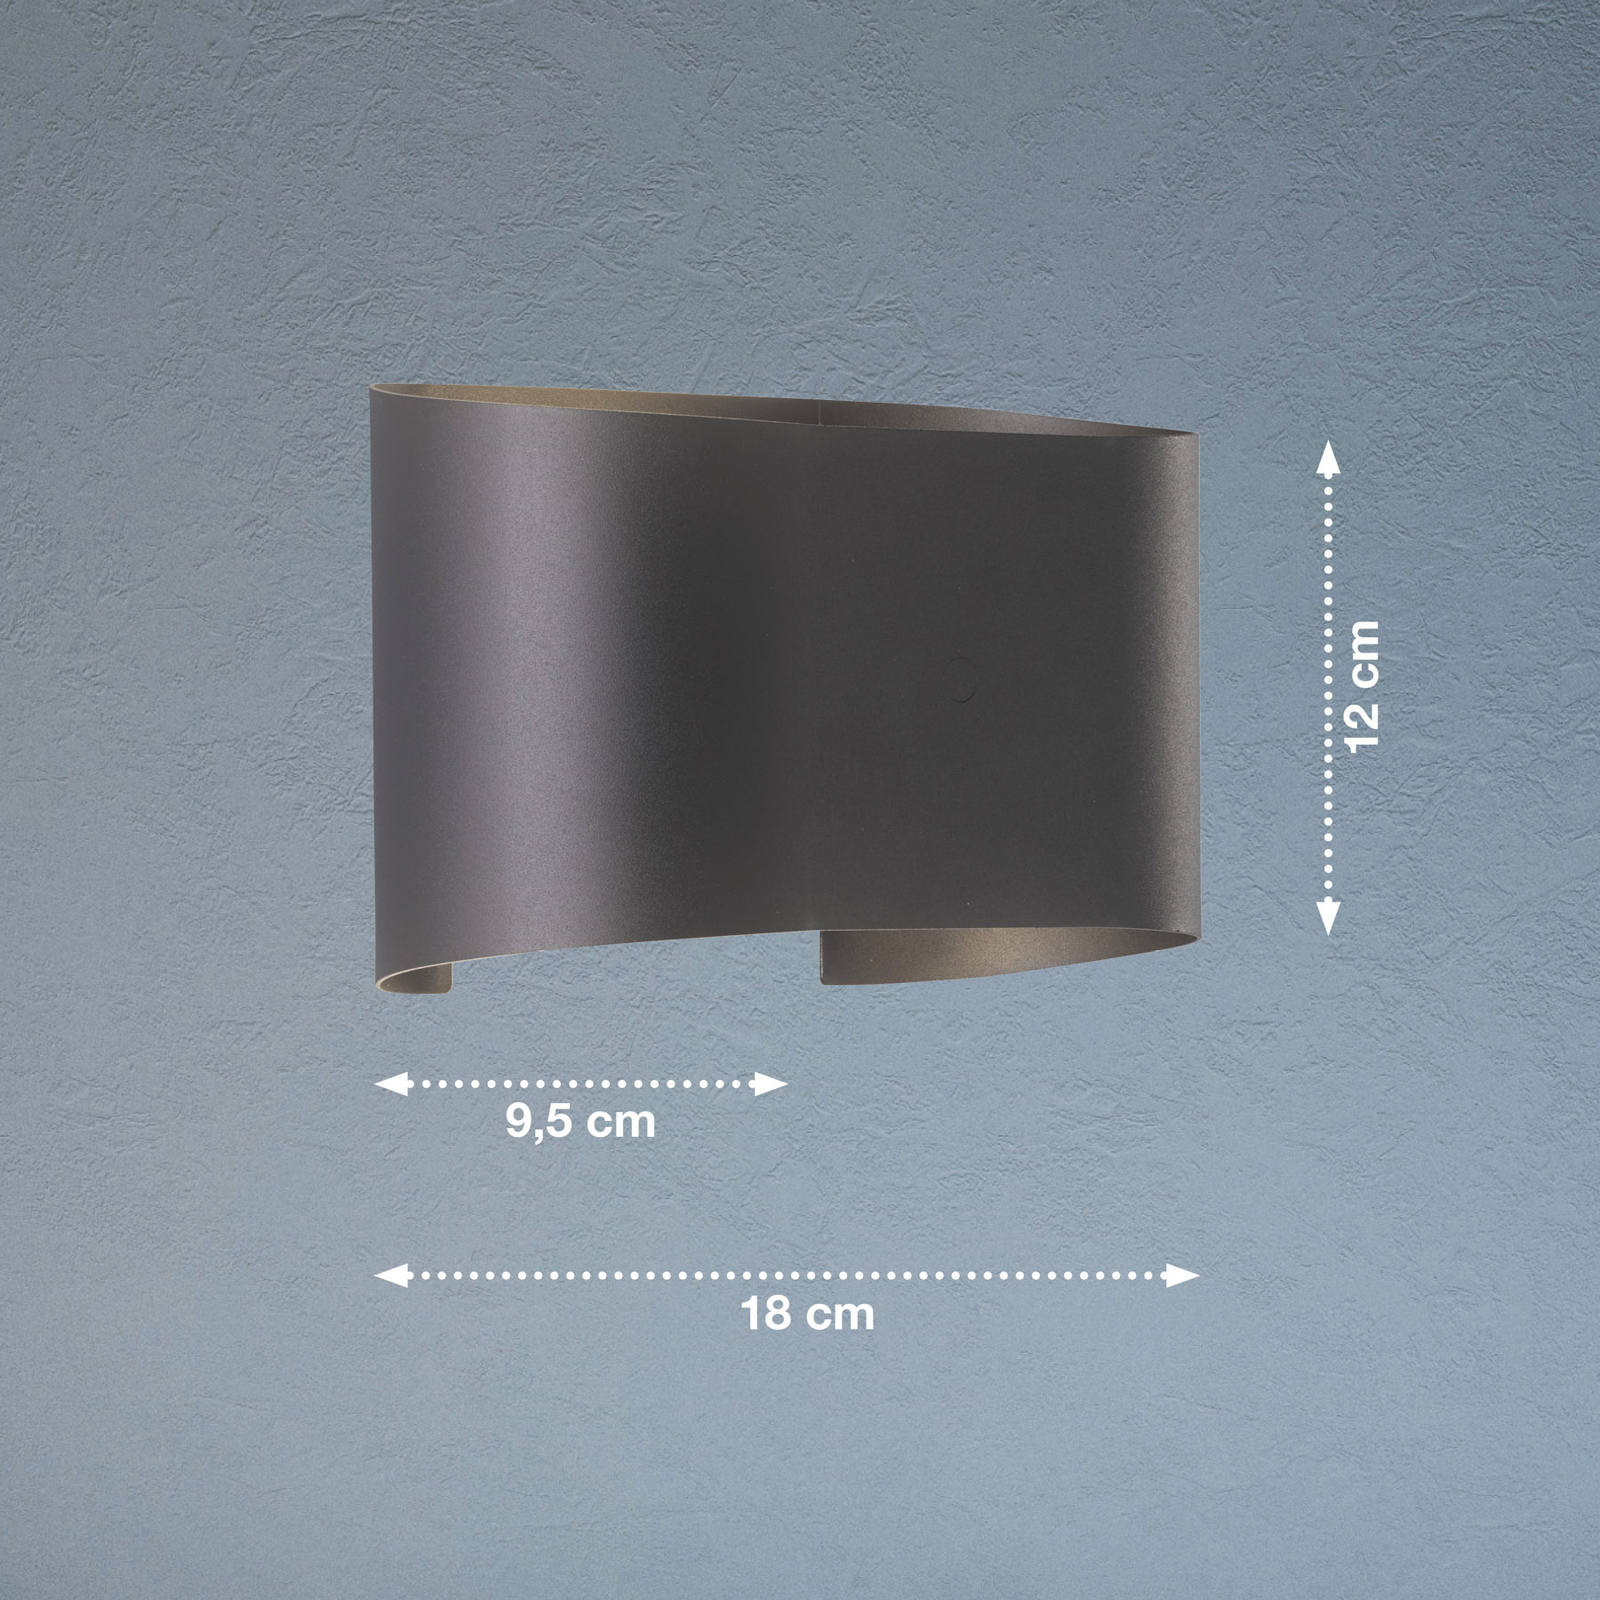 Wall LED wall light, 2-bulb, round, black